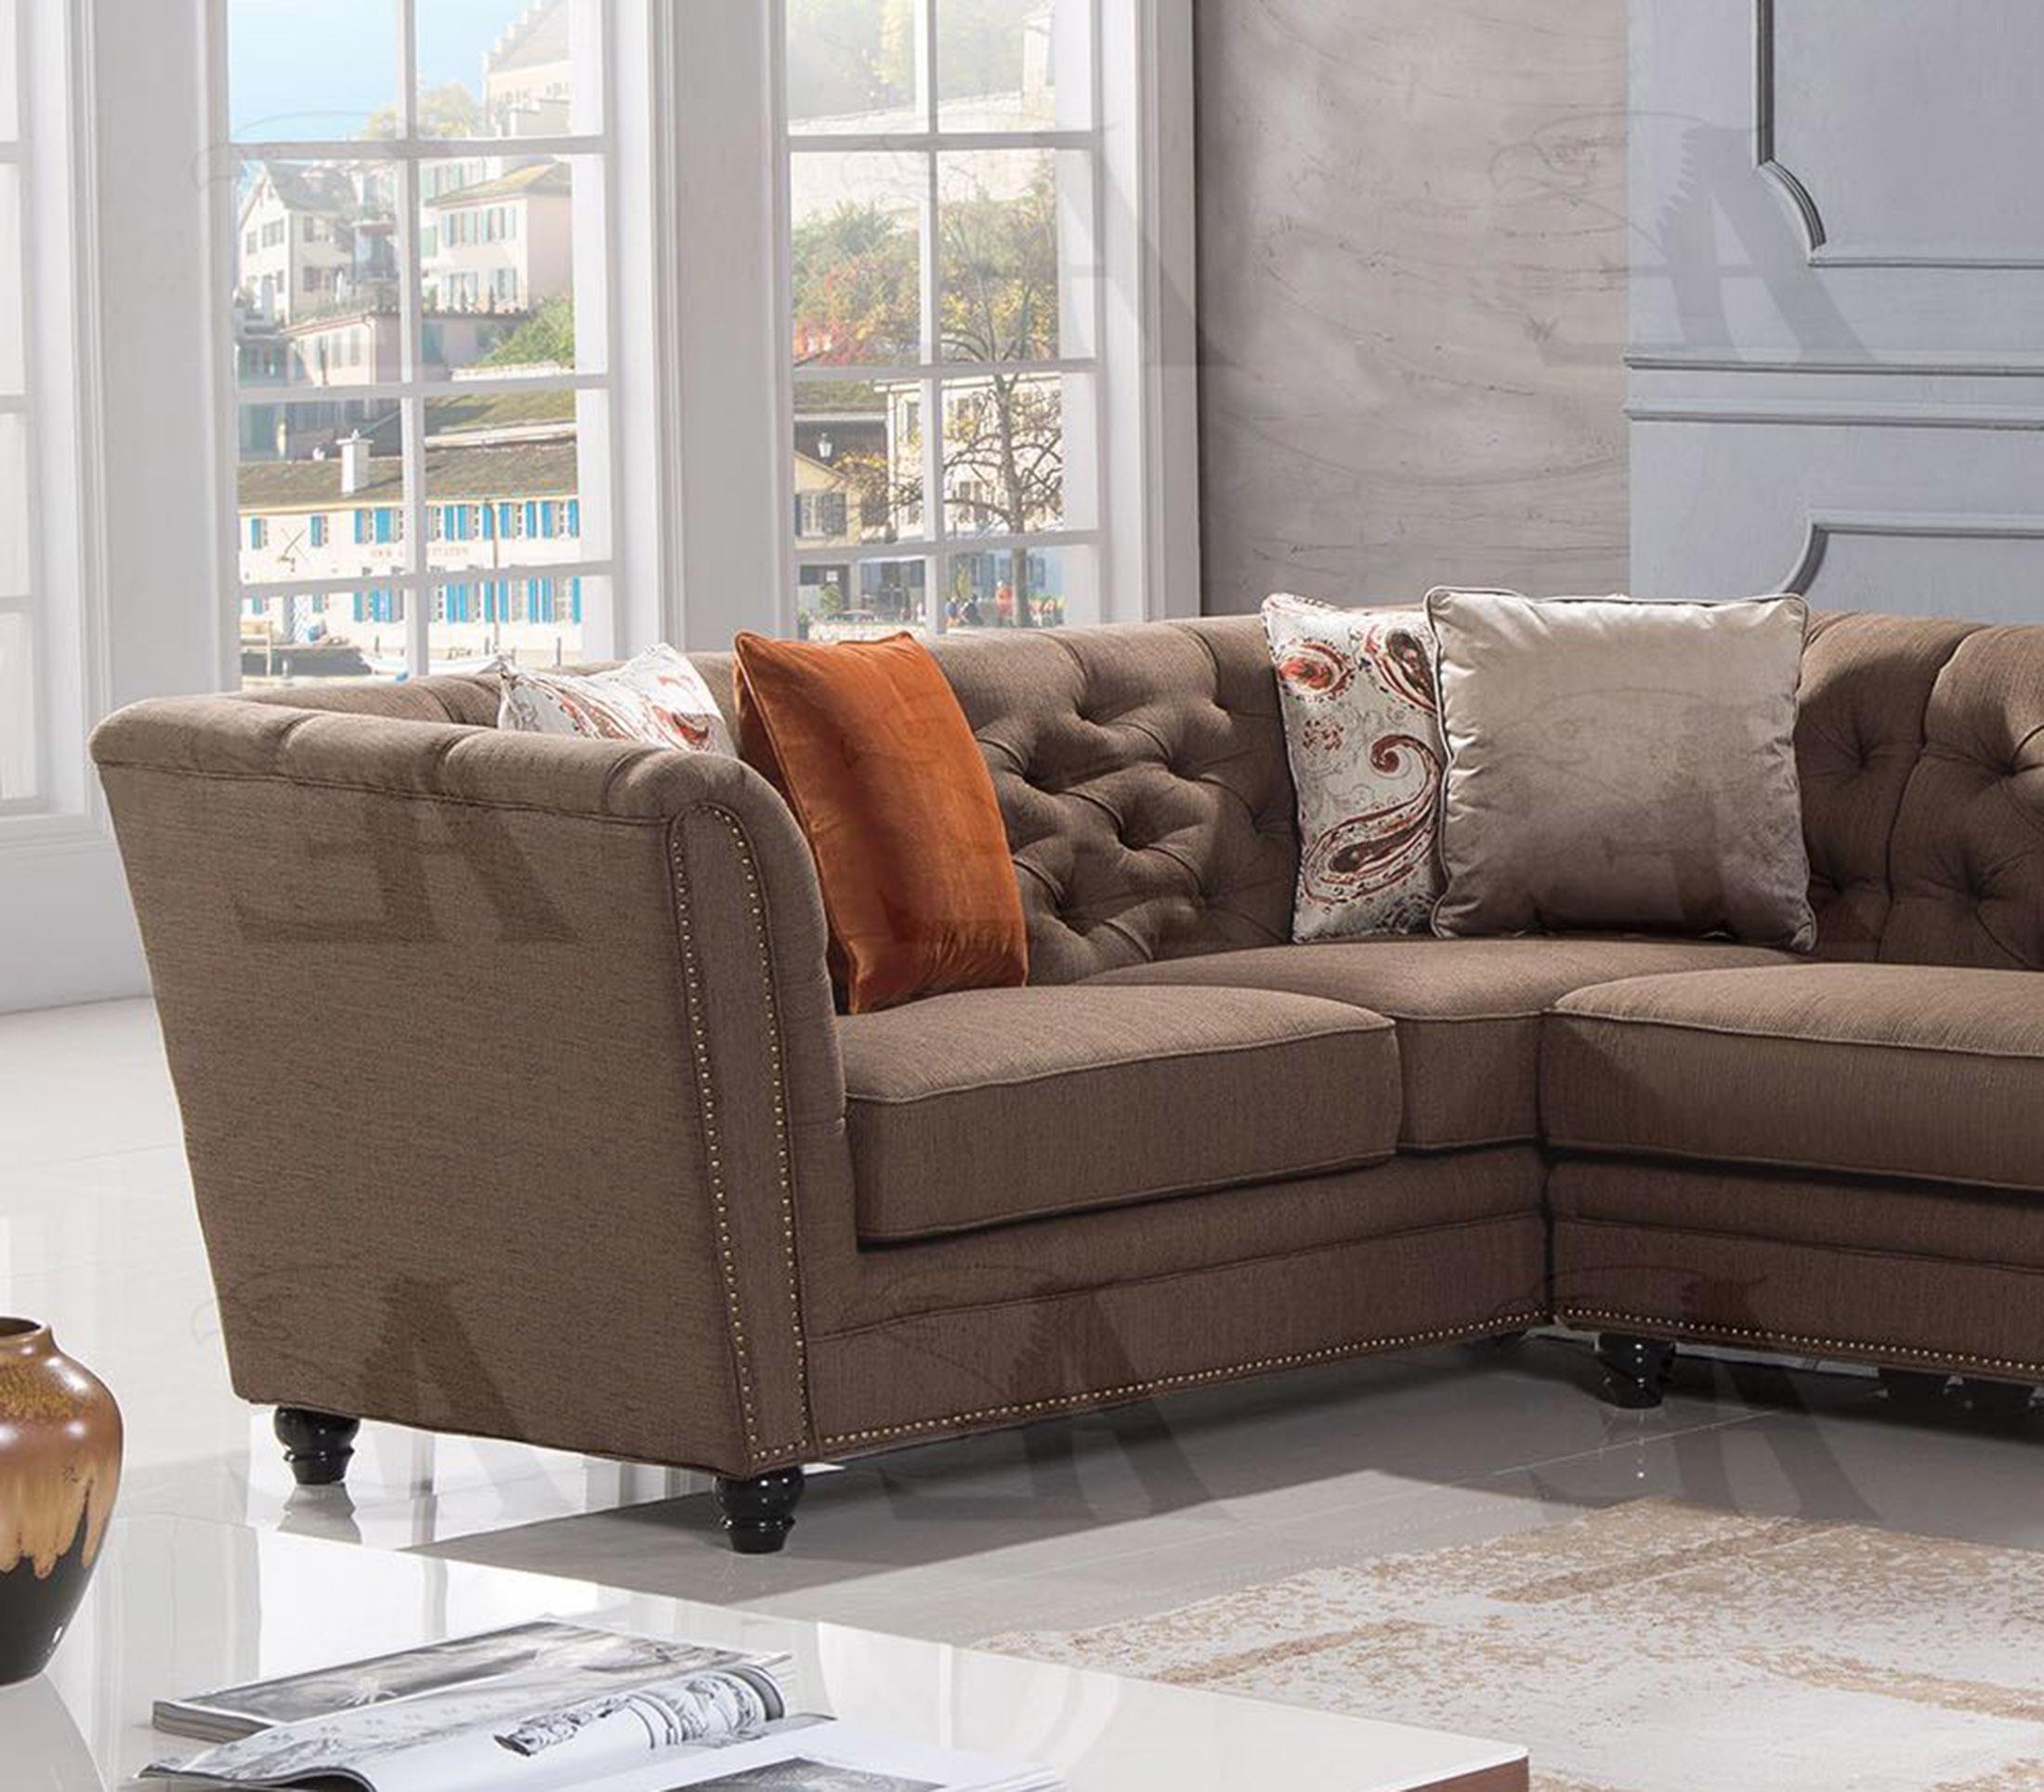 

    
American Eagle Furniture AE-L2219-BR Sectional Sofa Living Room Set Brown AE-L2219-BR Set-2 RHC
